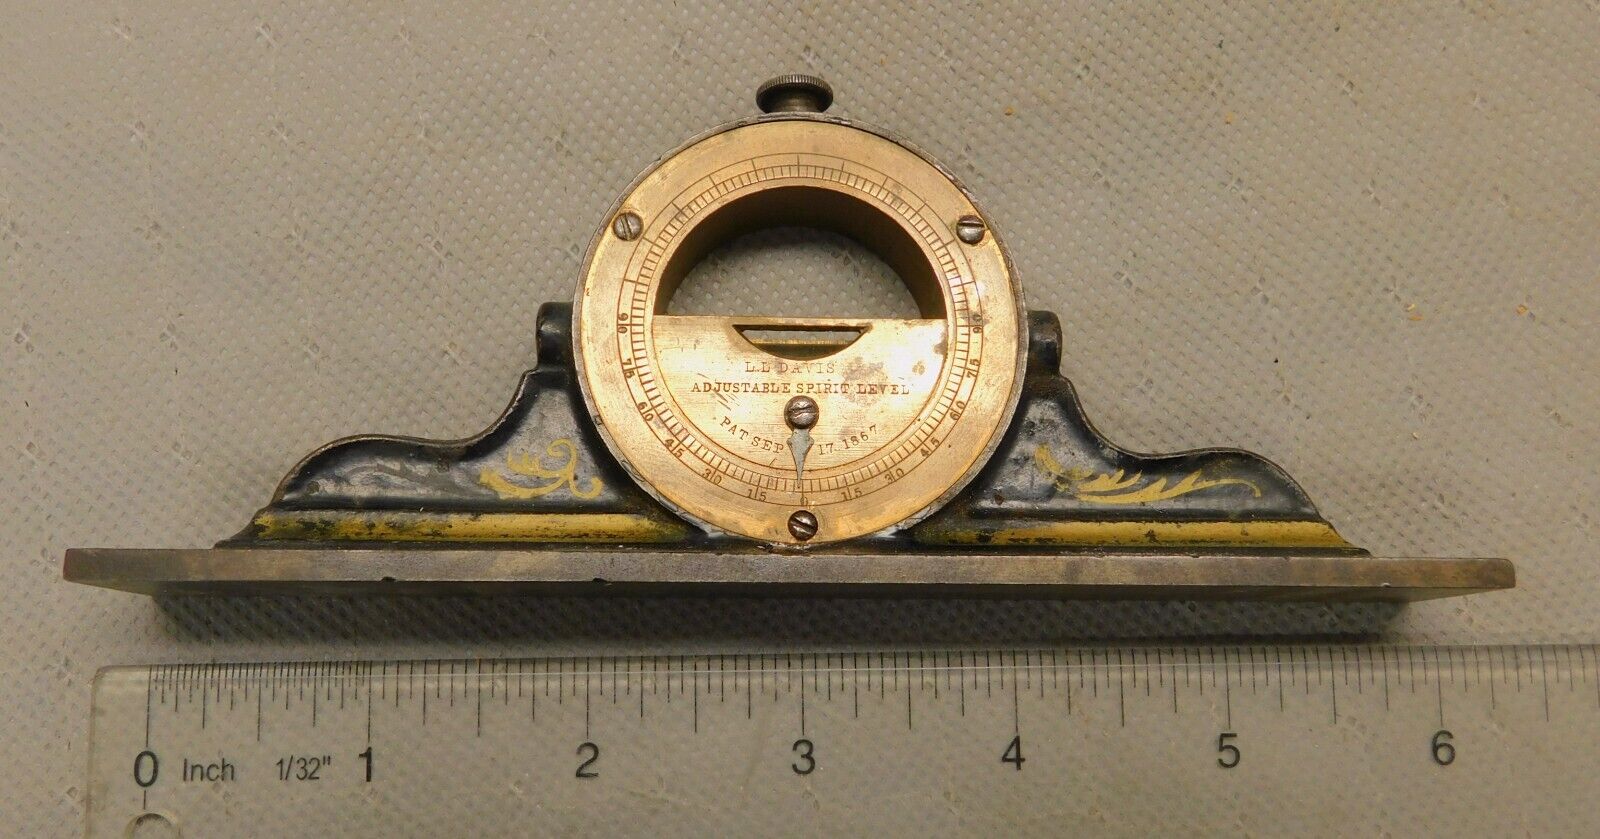 L. L. Davis Adjustable Spirit Level  Mantle Clock Level / Antique Inclinometer